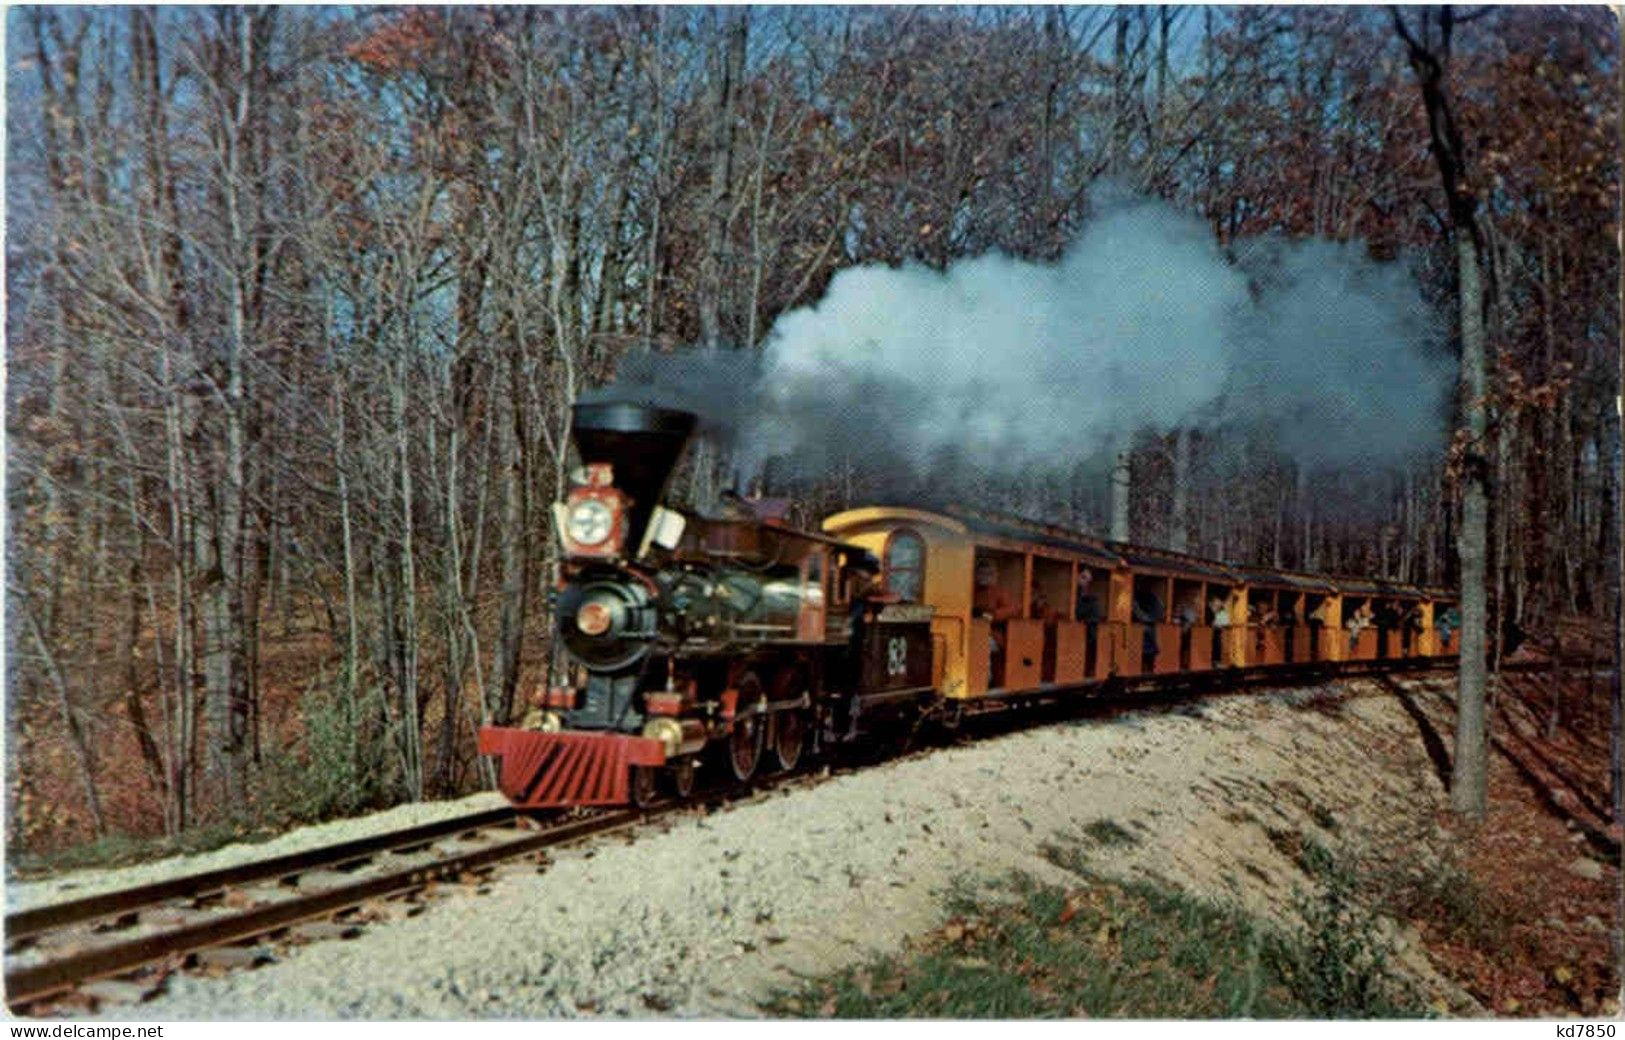 Model Railroad At Milwaukee County Zoo - Milwaukee